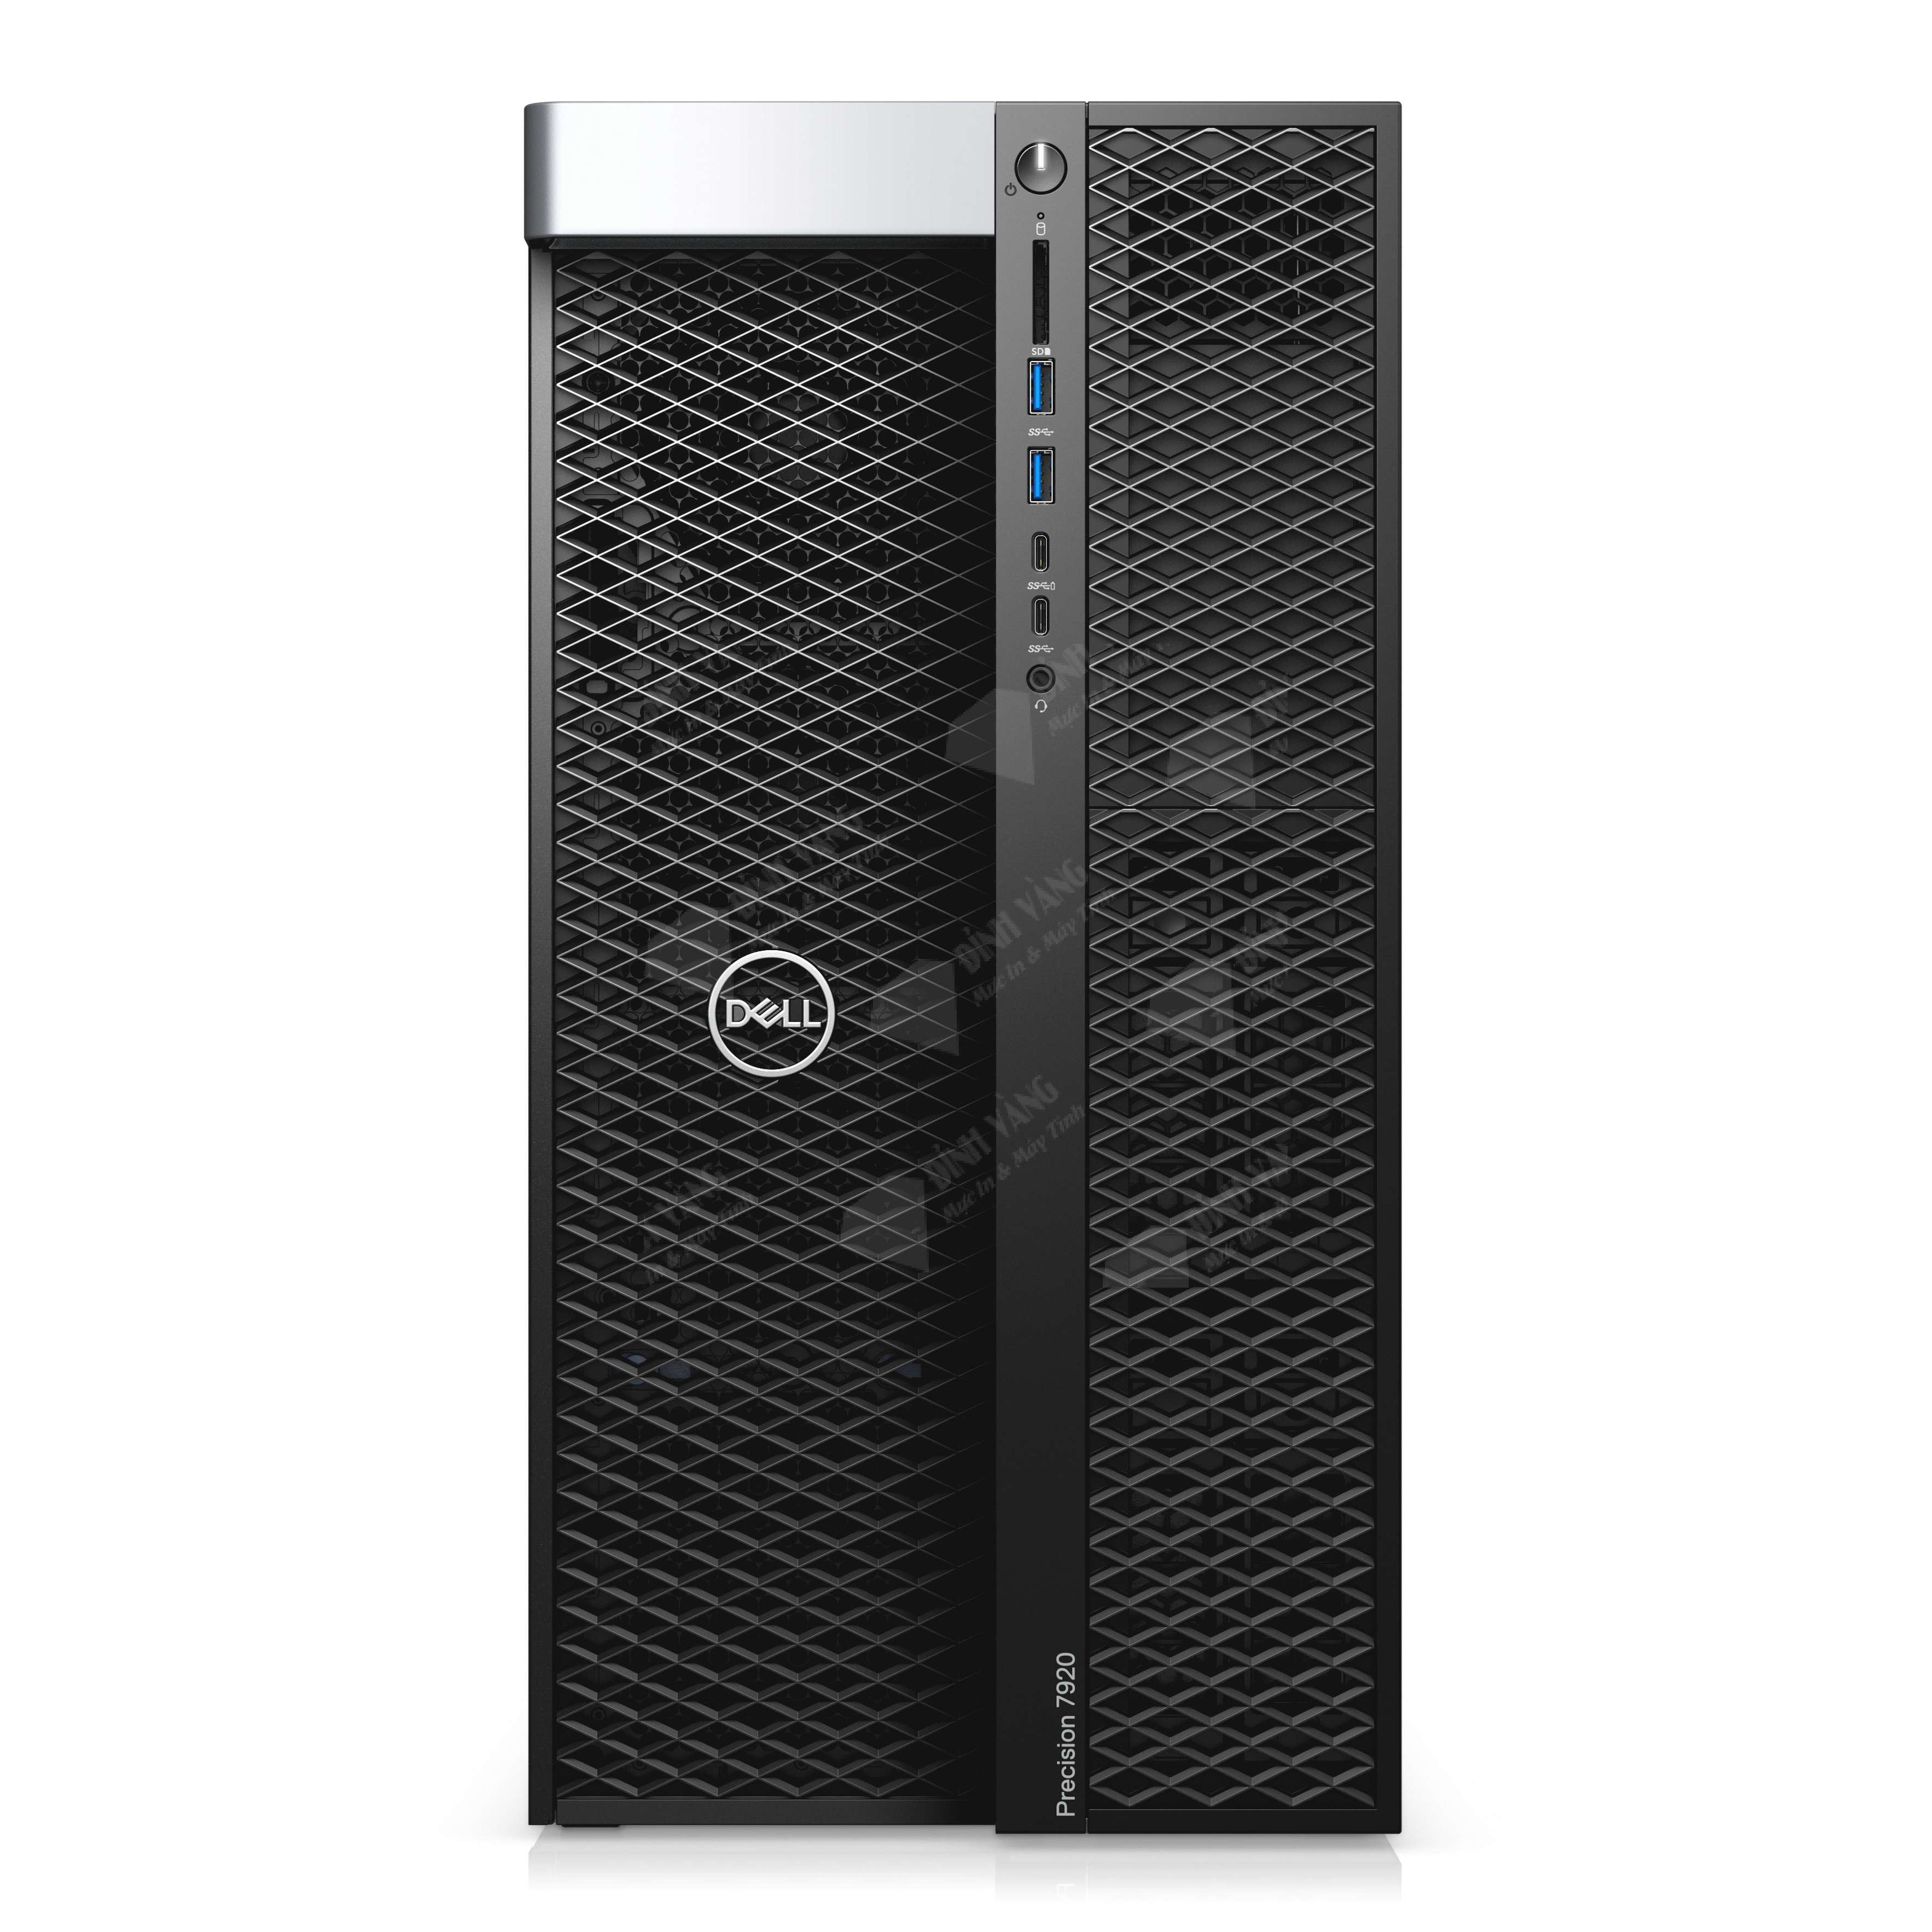 PC Dell Workstation Precision 7920 Tower 42PT79DW06 (Intel Xeon Silver 4112, Ram 16GB, HDD 2TB + SSD 256GB, Nvidia Quadro RTX5000 16GB, Win10 Pro, 3Y)